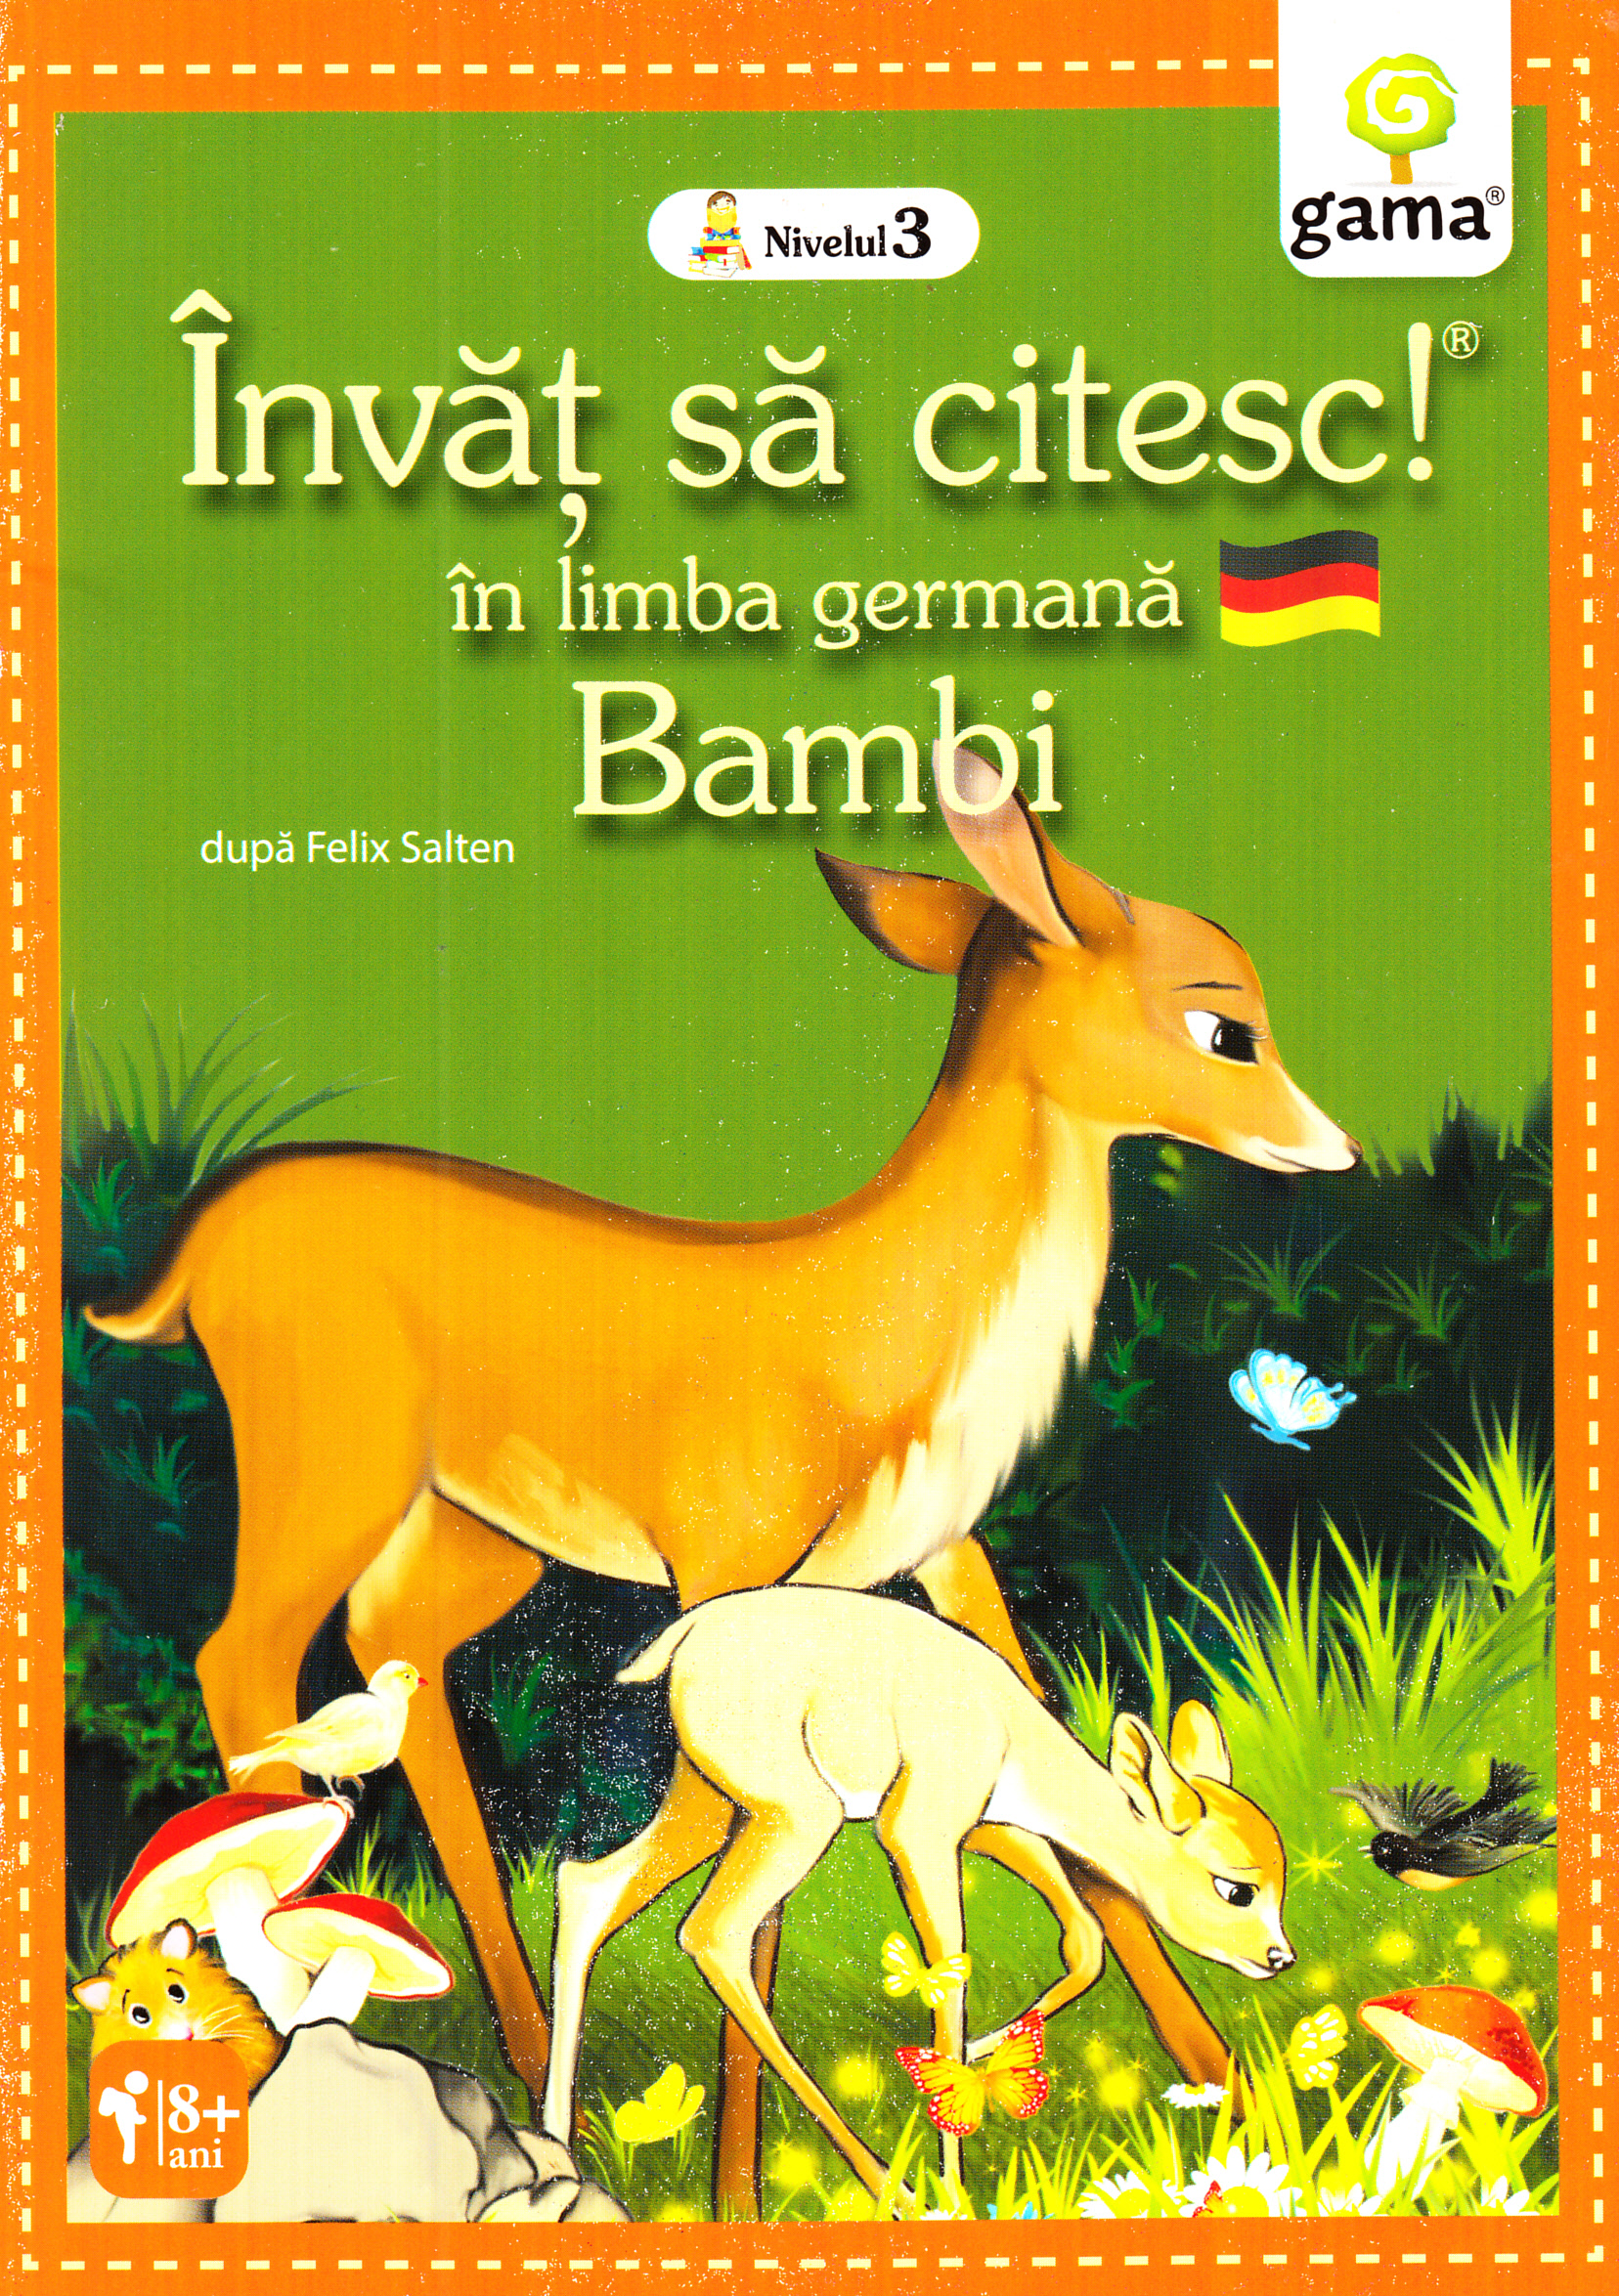 Invat sa citesc in limba germana - Bambi - Nivelul 3